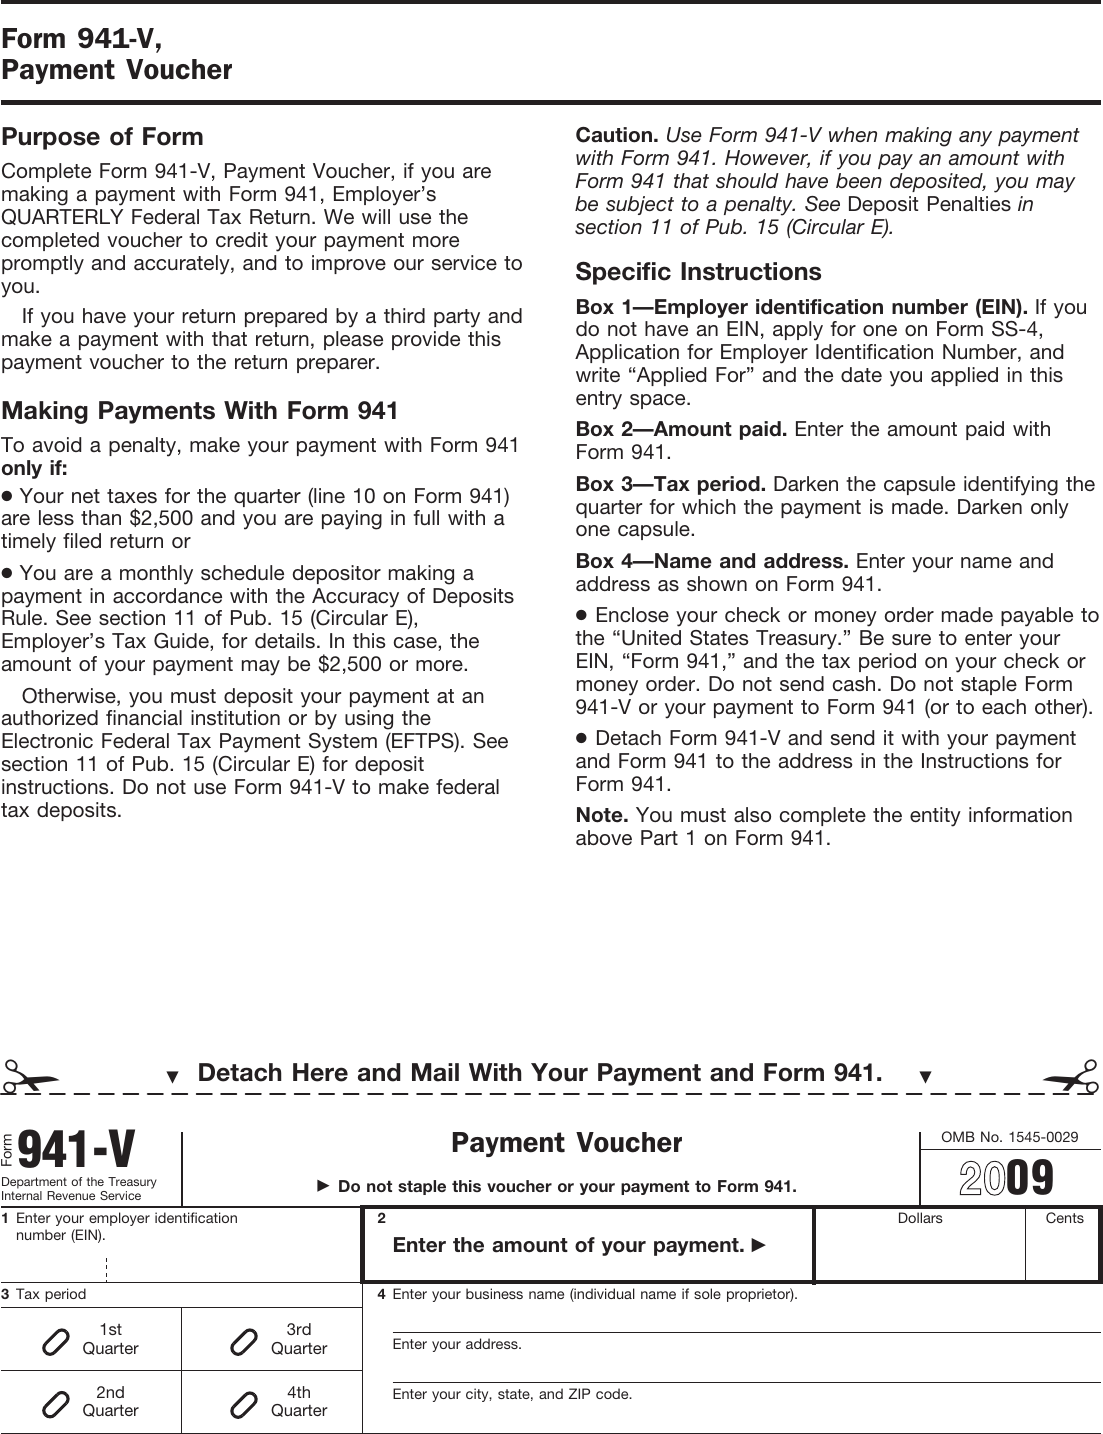 Page 3 of 4 - Form 941 (Rev. April 2009)  101030